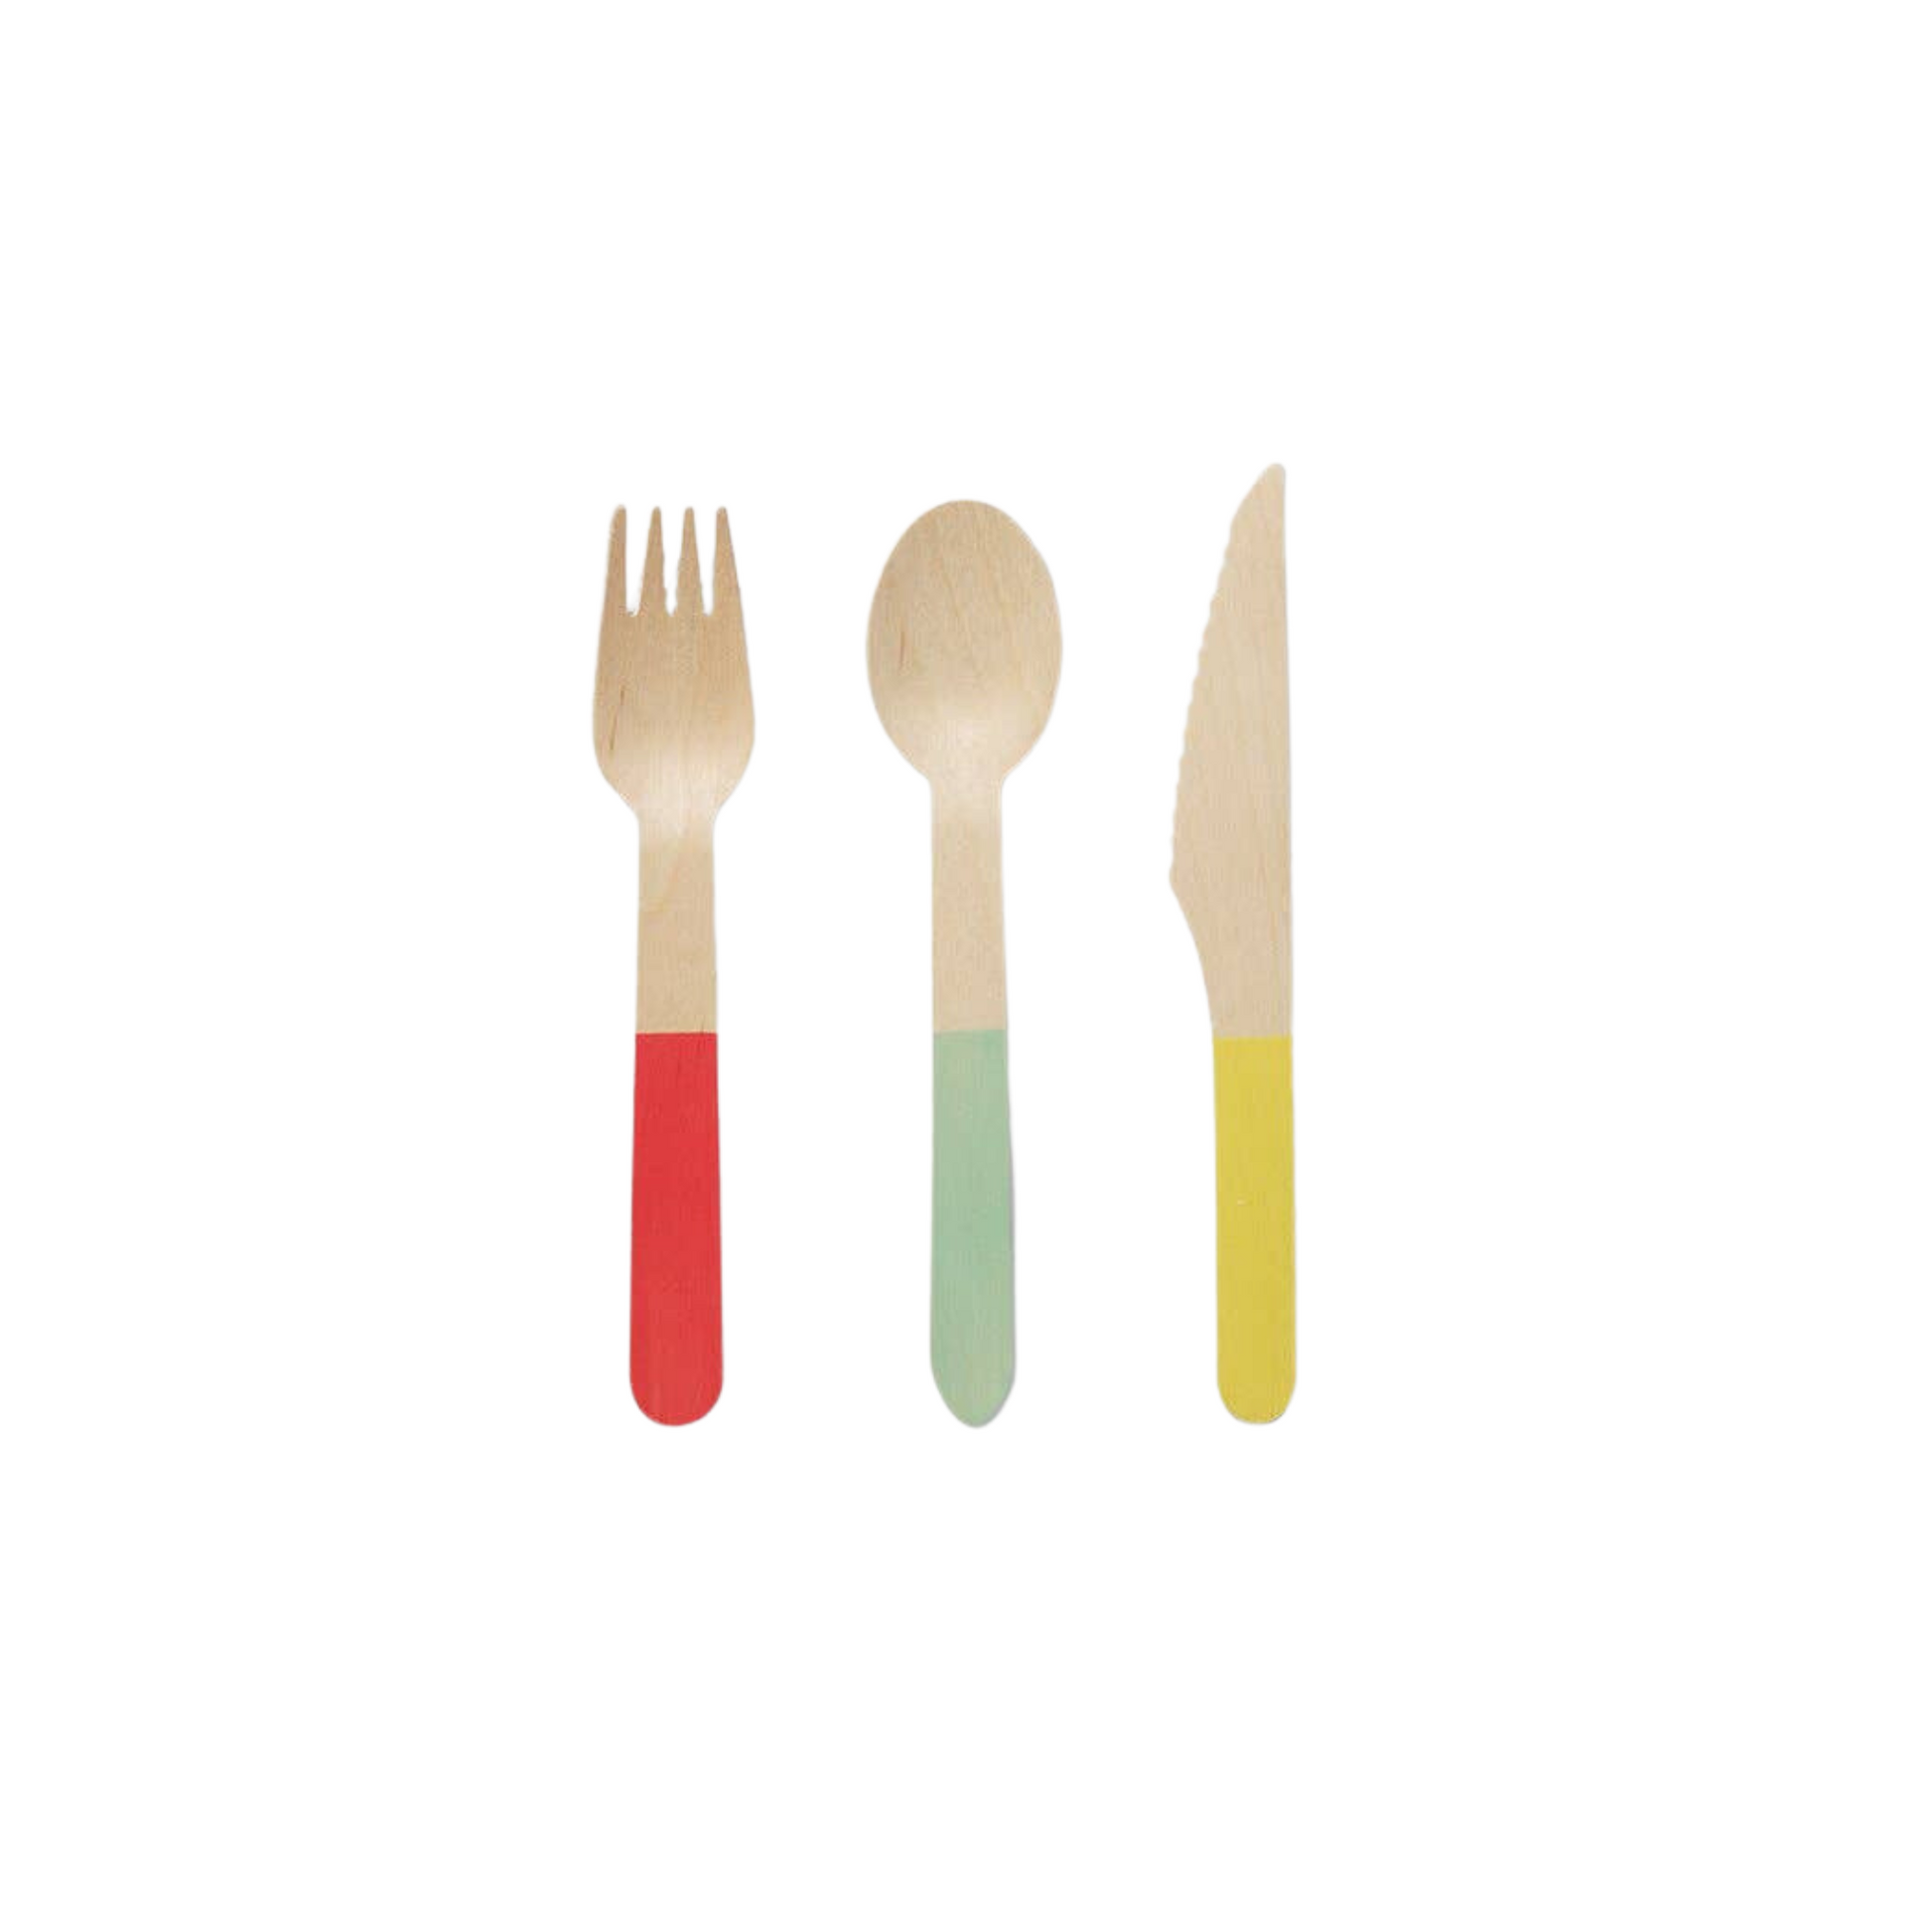 tricolour wooden cutlery set